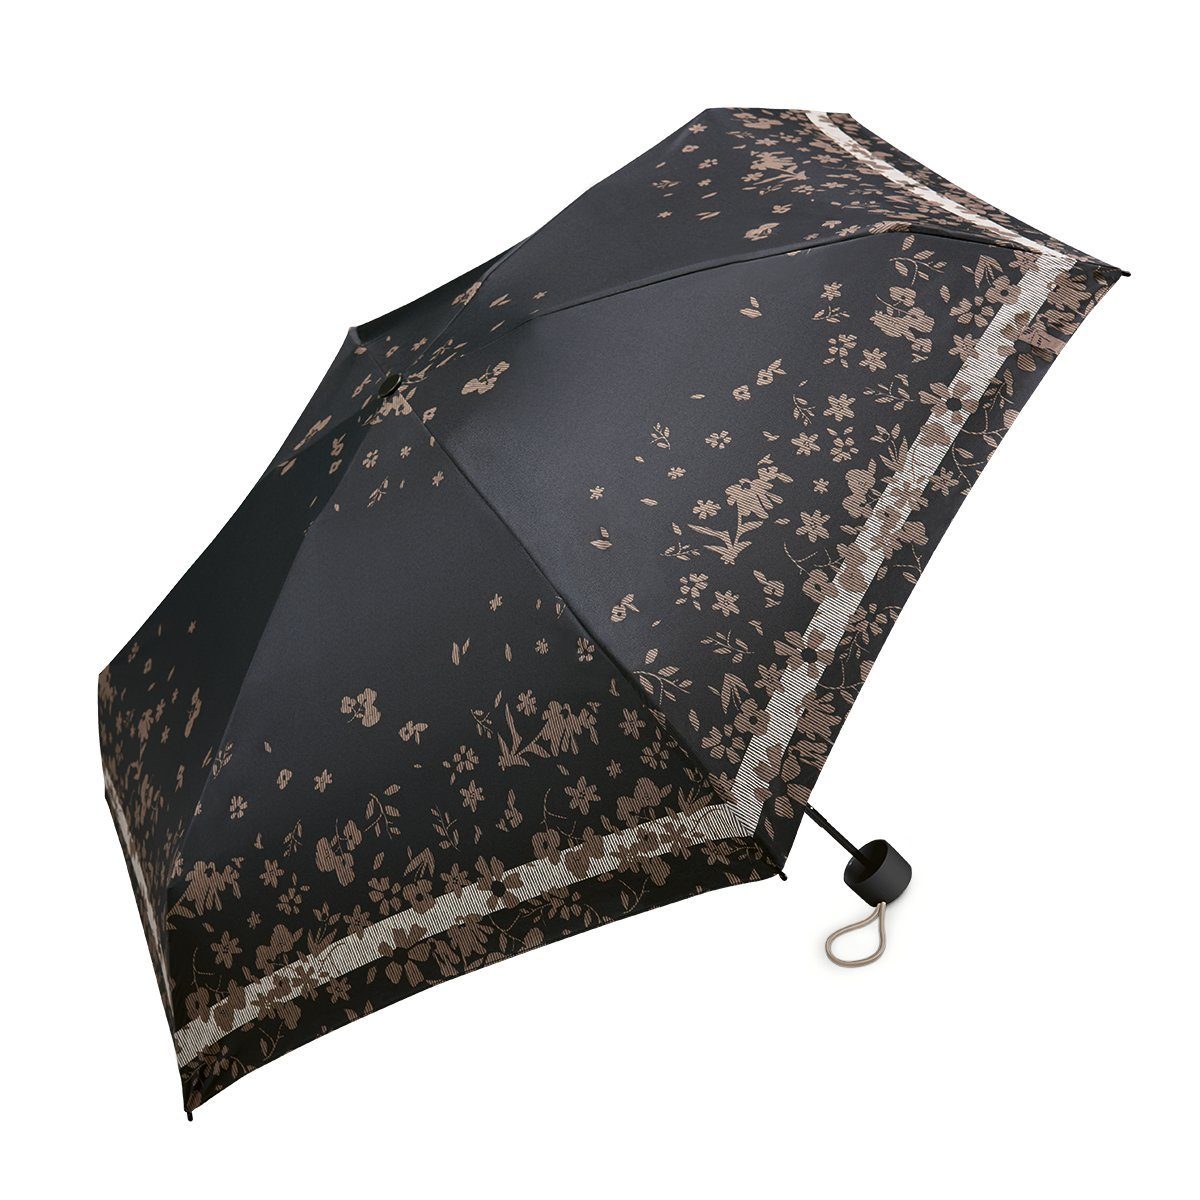 Esprit Taschenregenschirm kleiner, kompakter Regenschirm Petito poetry flower black